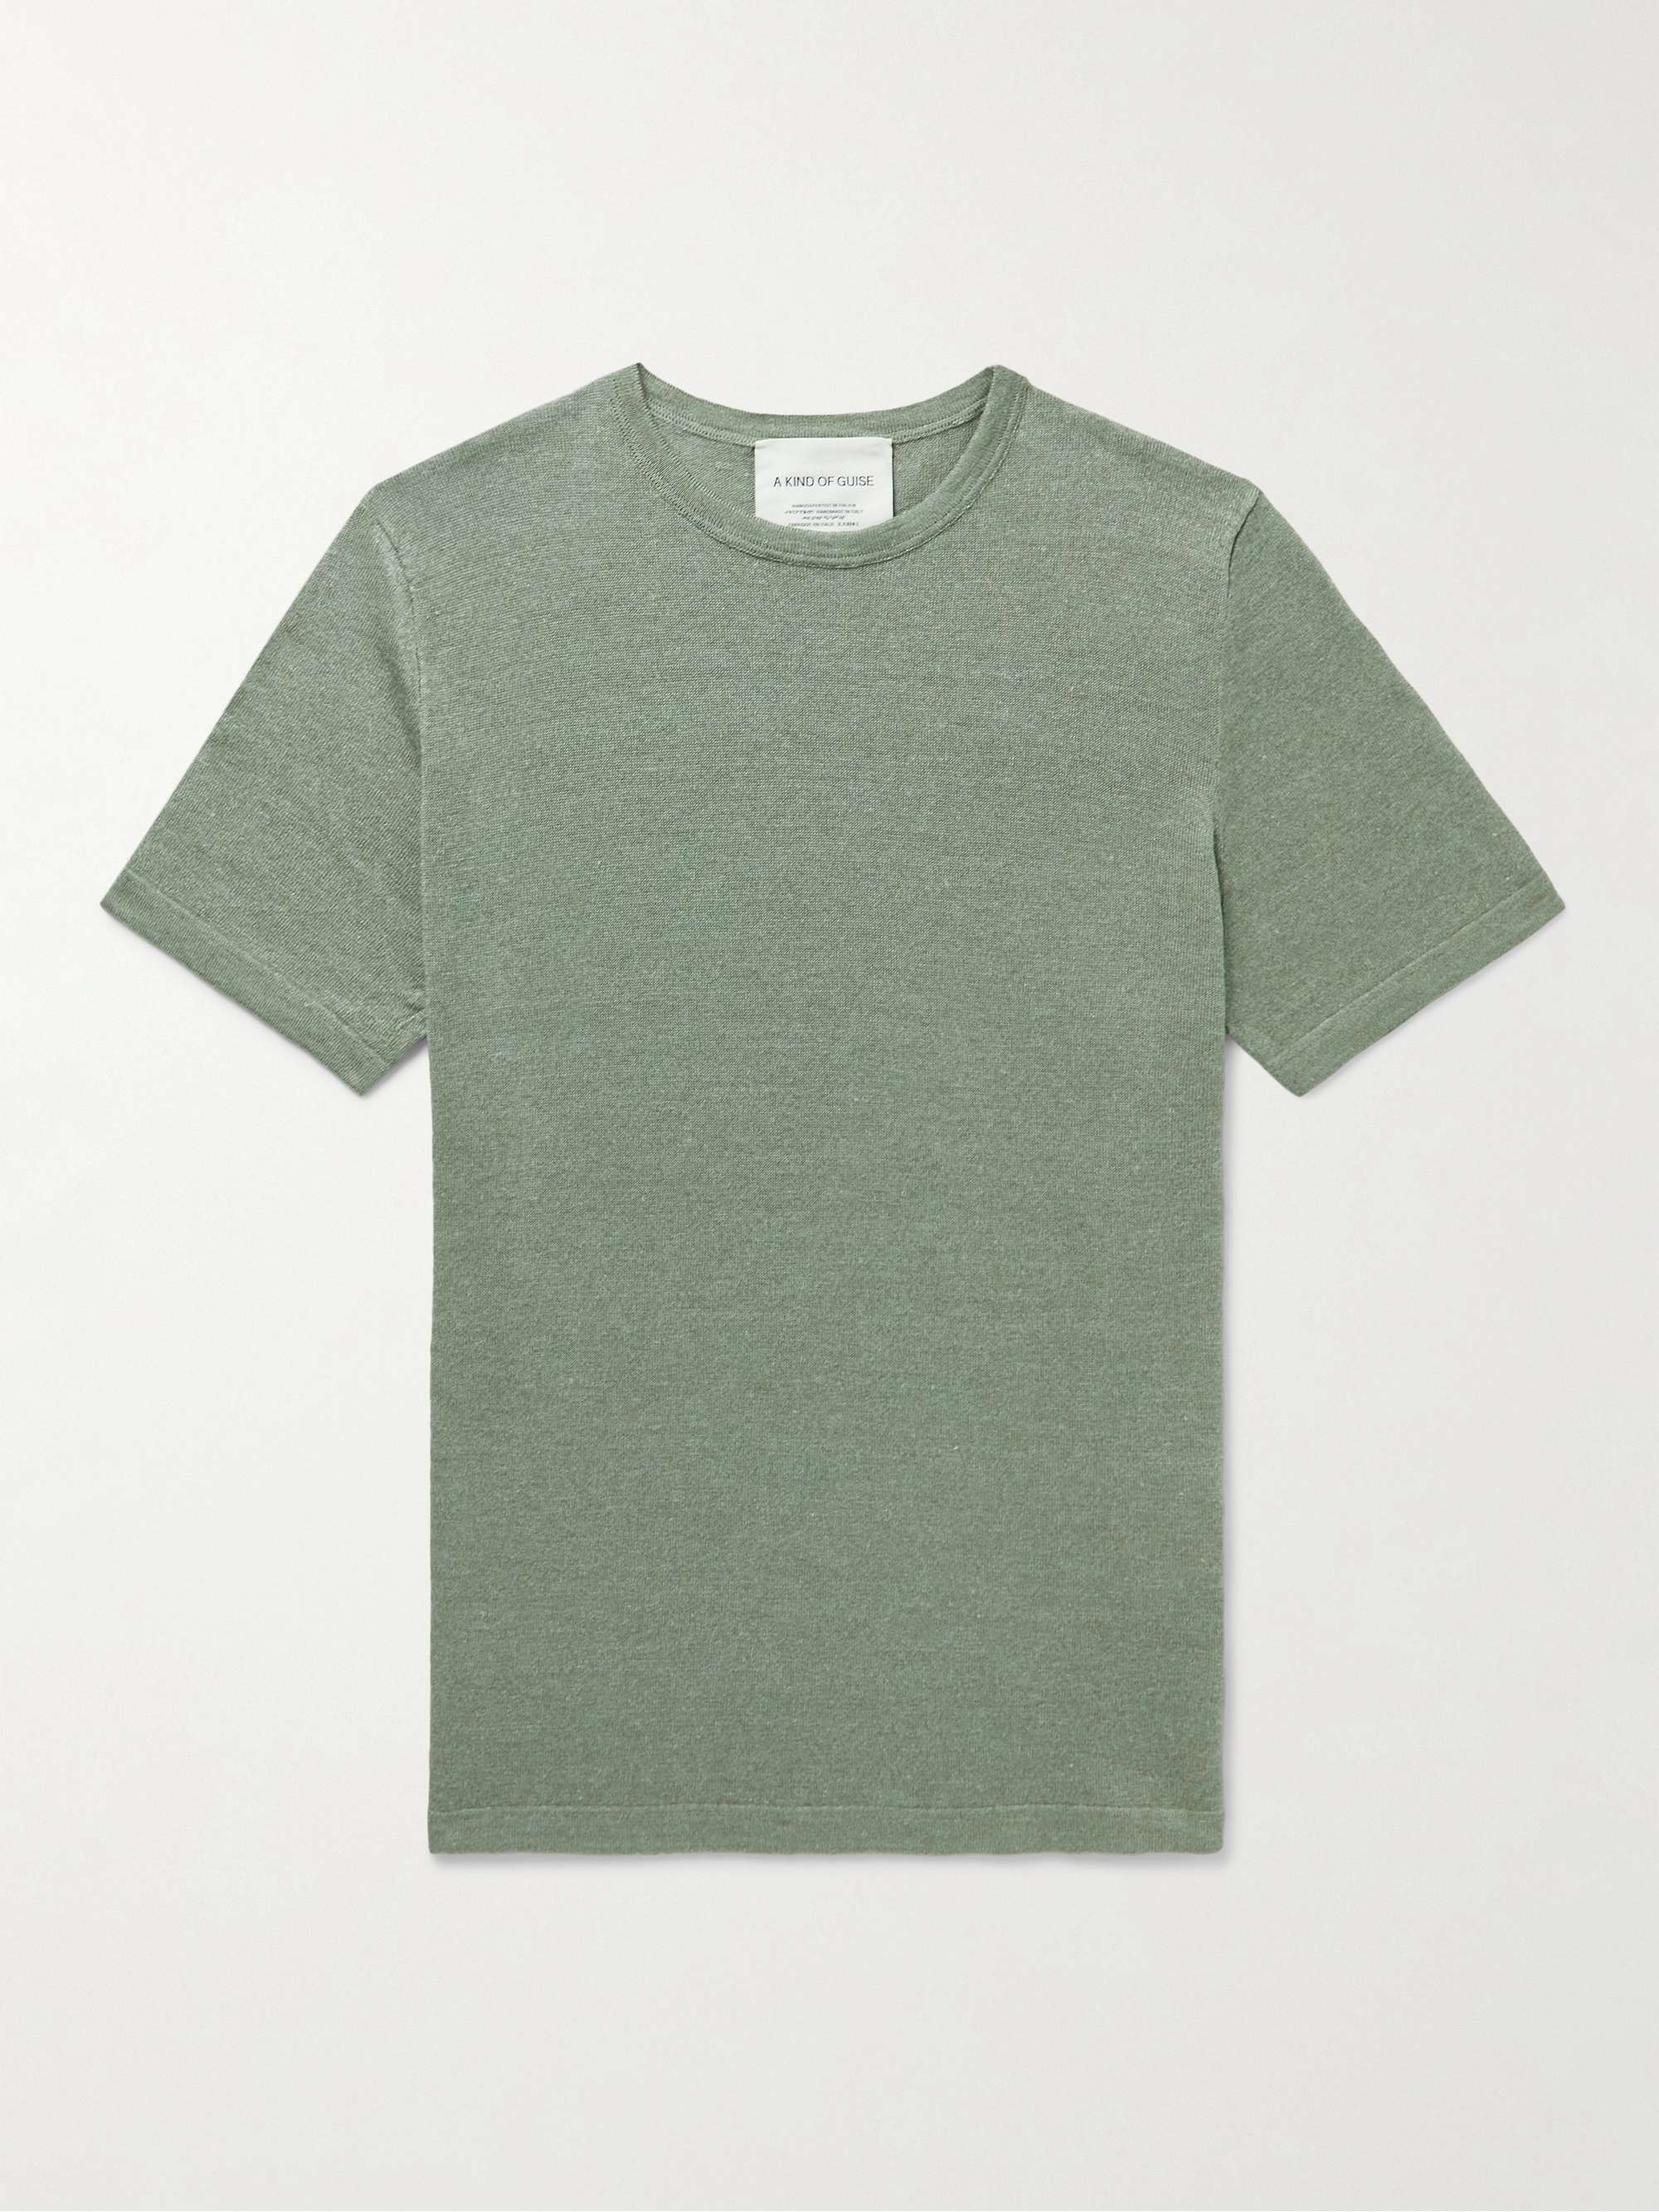 A KIND OF GUISE Hamdi Linen and Merino Wool-Blend T-Shirt